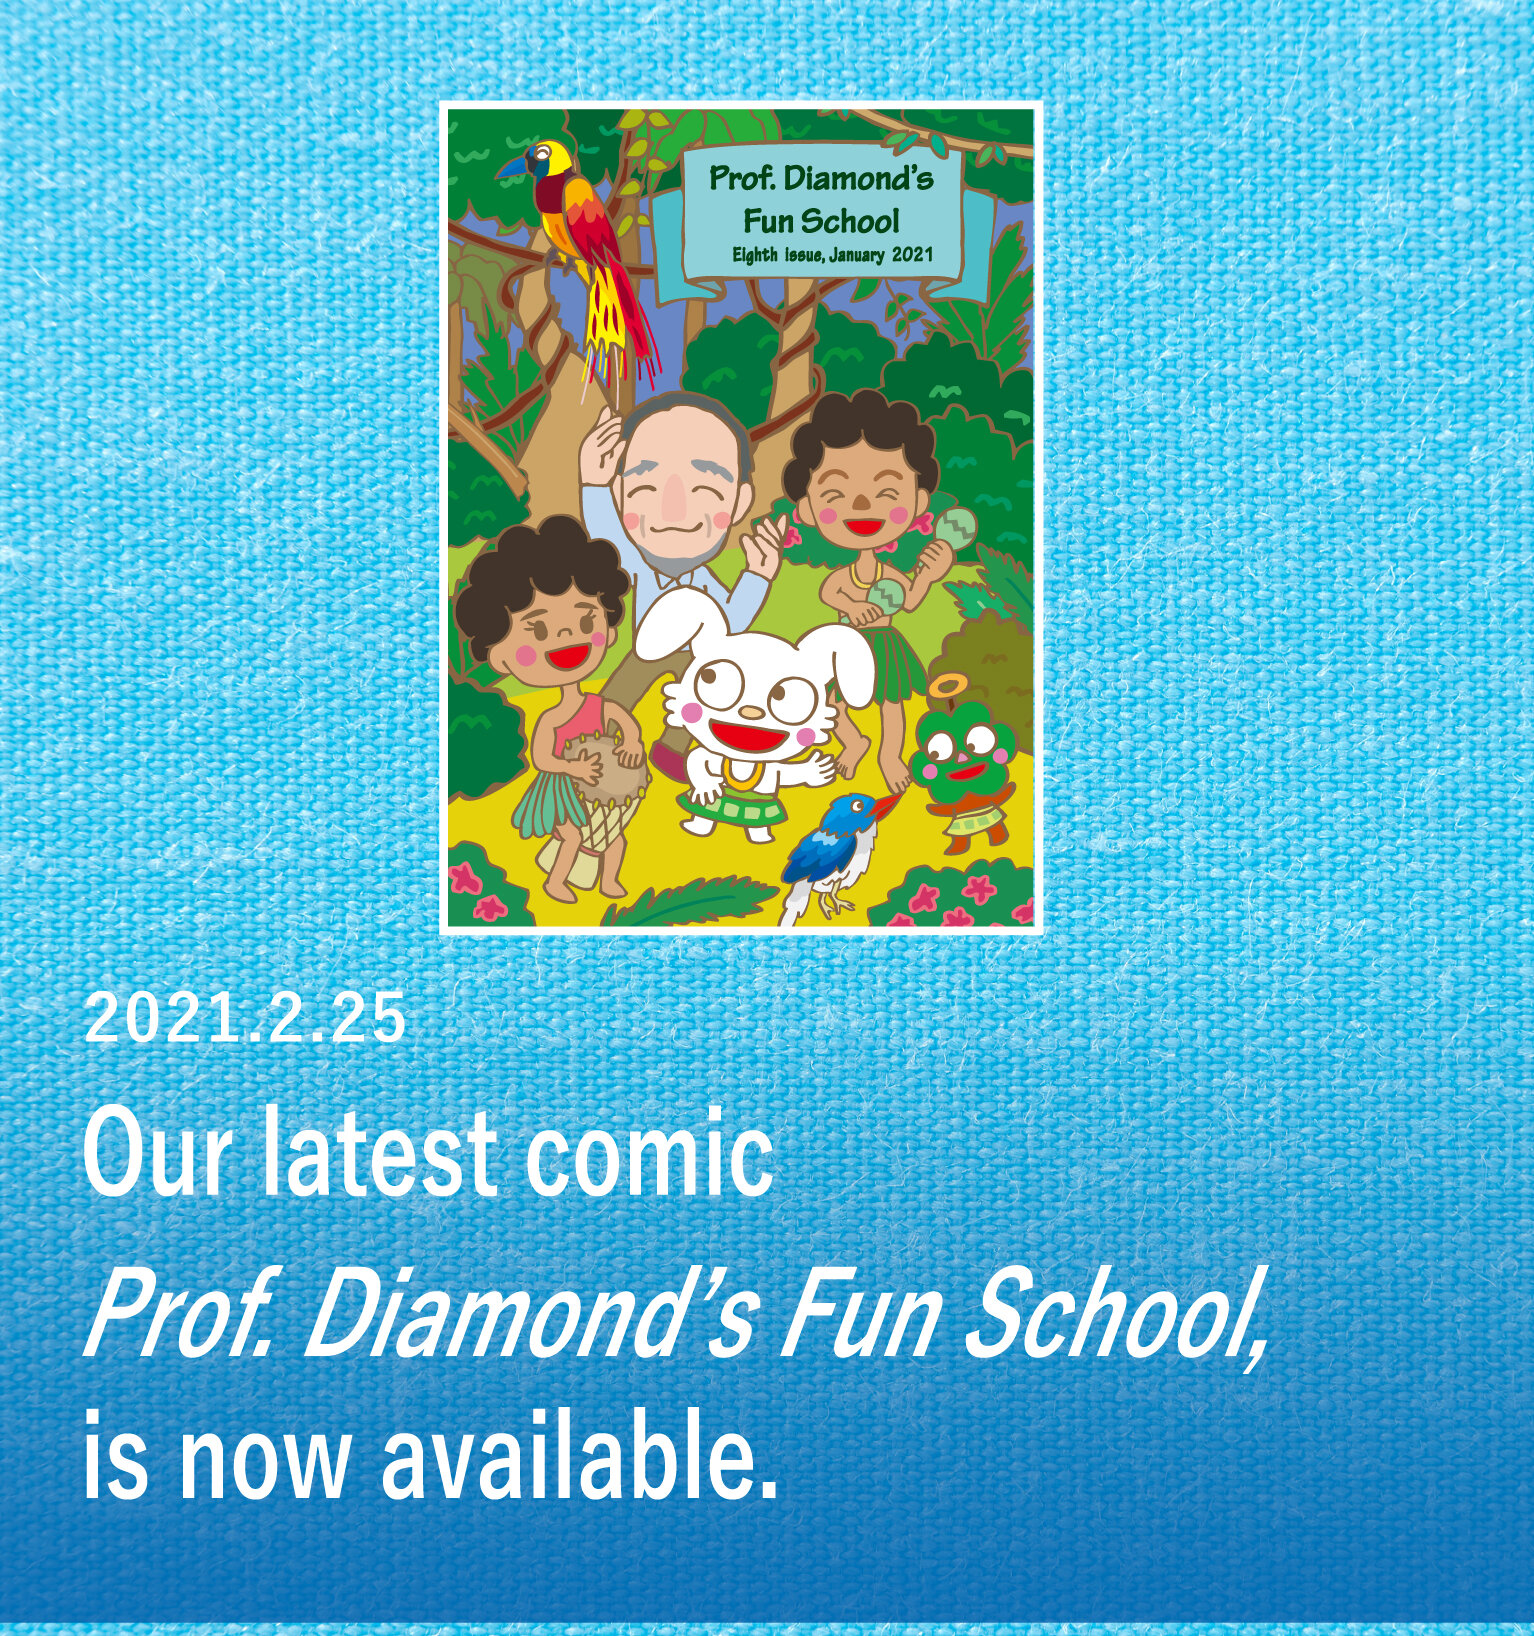 Prof. Diamond's Fun School has been published